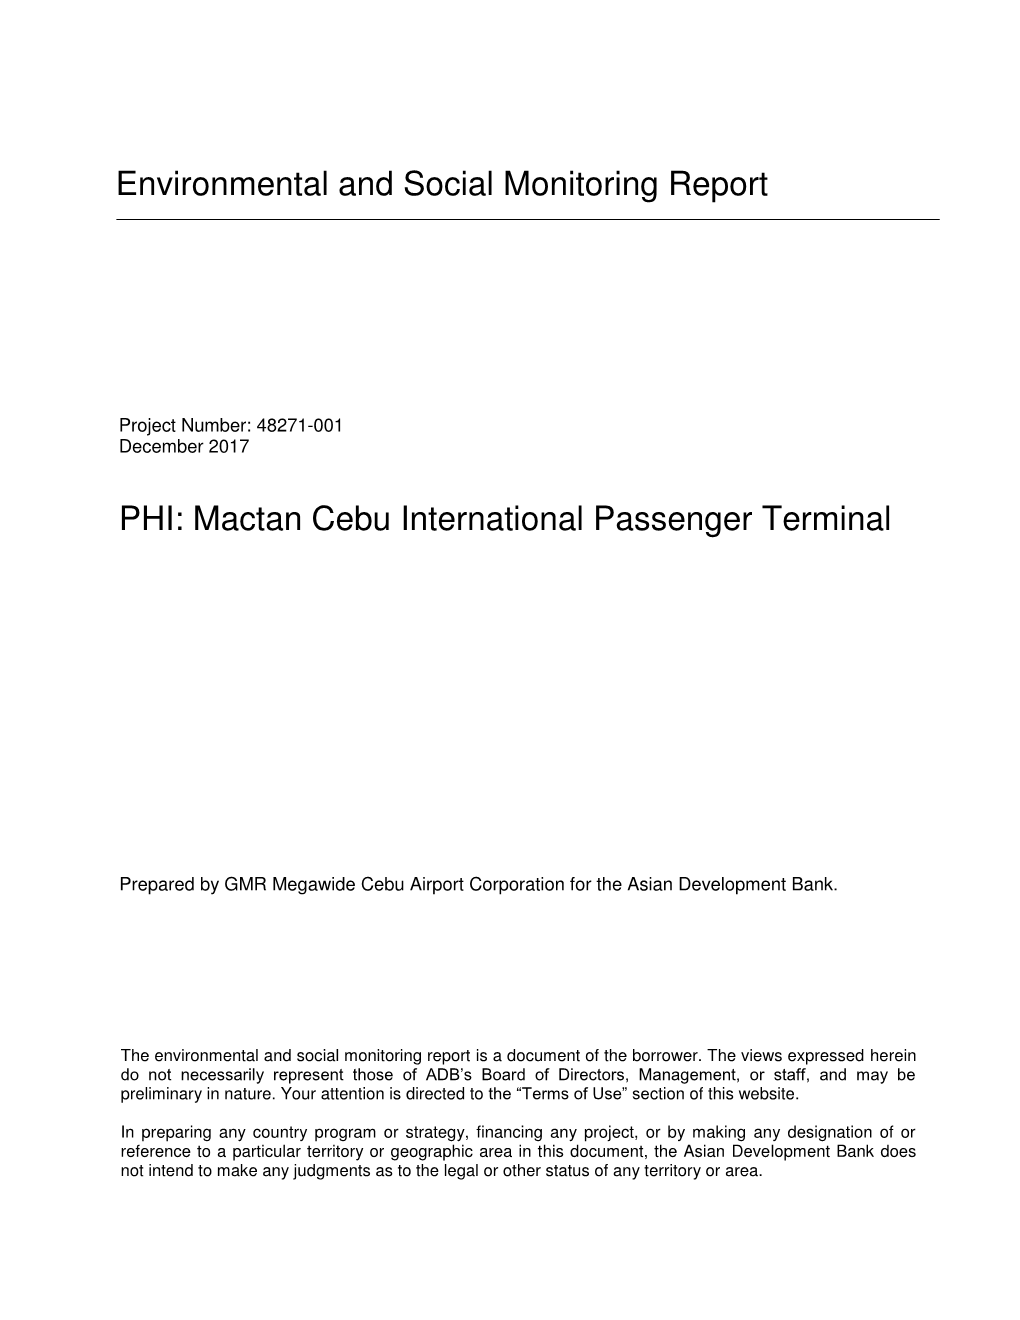 48271-001: Mactan-Cebu International Passenger Terminal Project